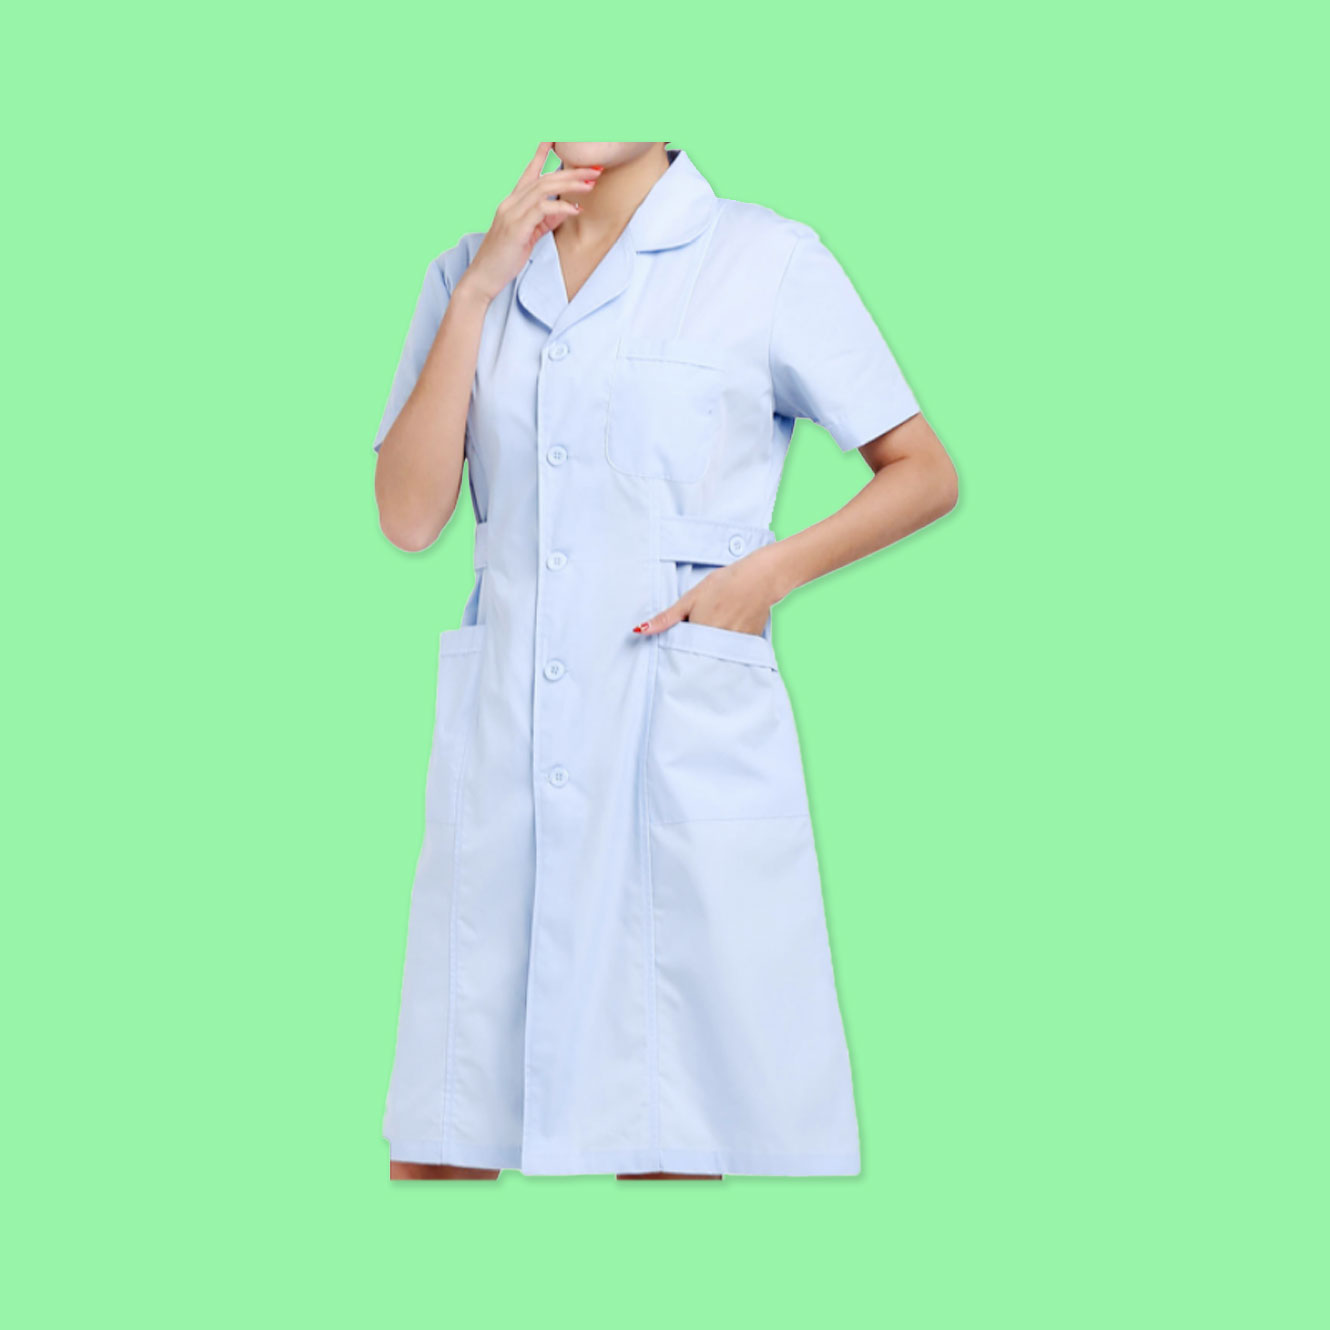 https://bigbanner.com.au/wp-content/uploads/2020/02/Nurse-Uniform-2.jpg